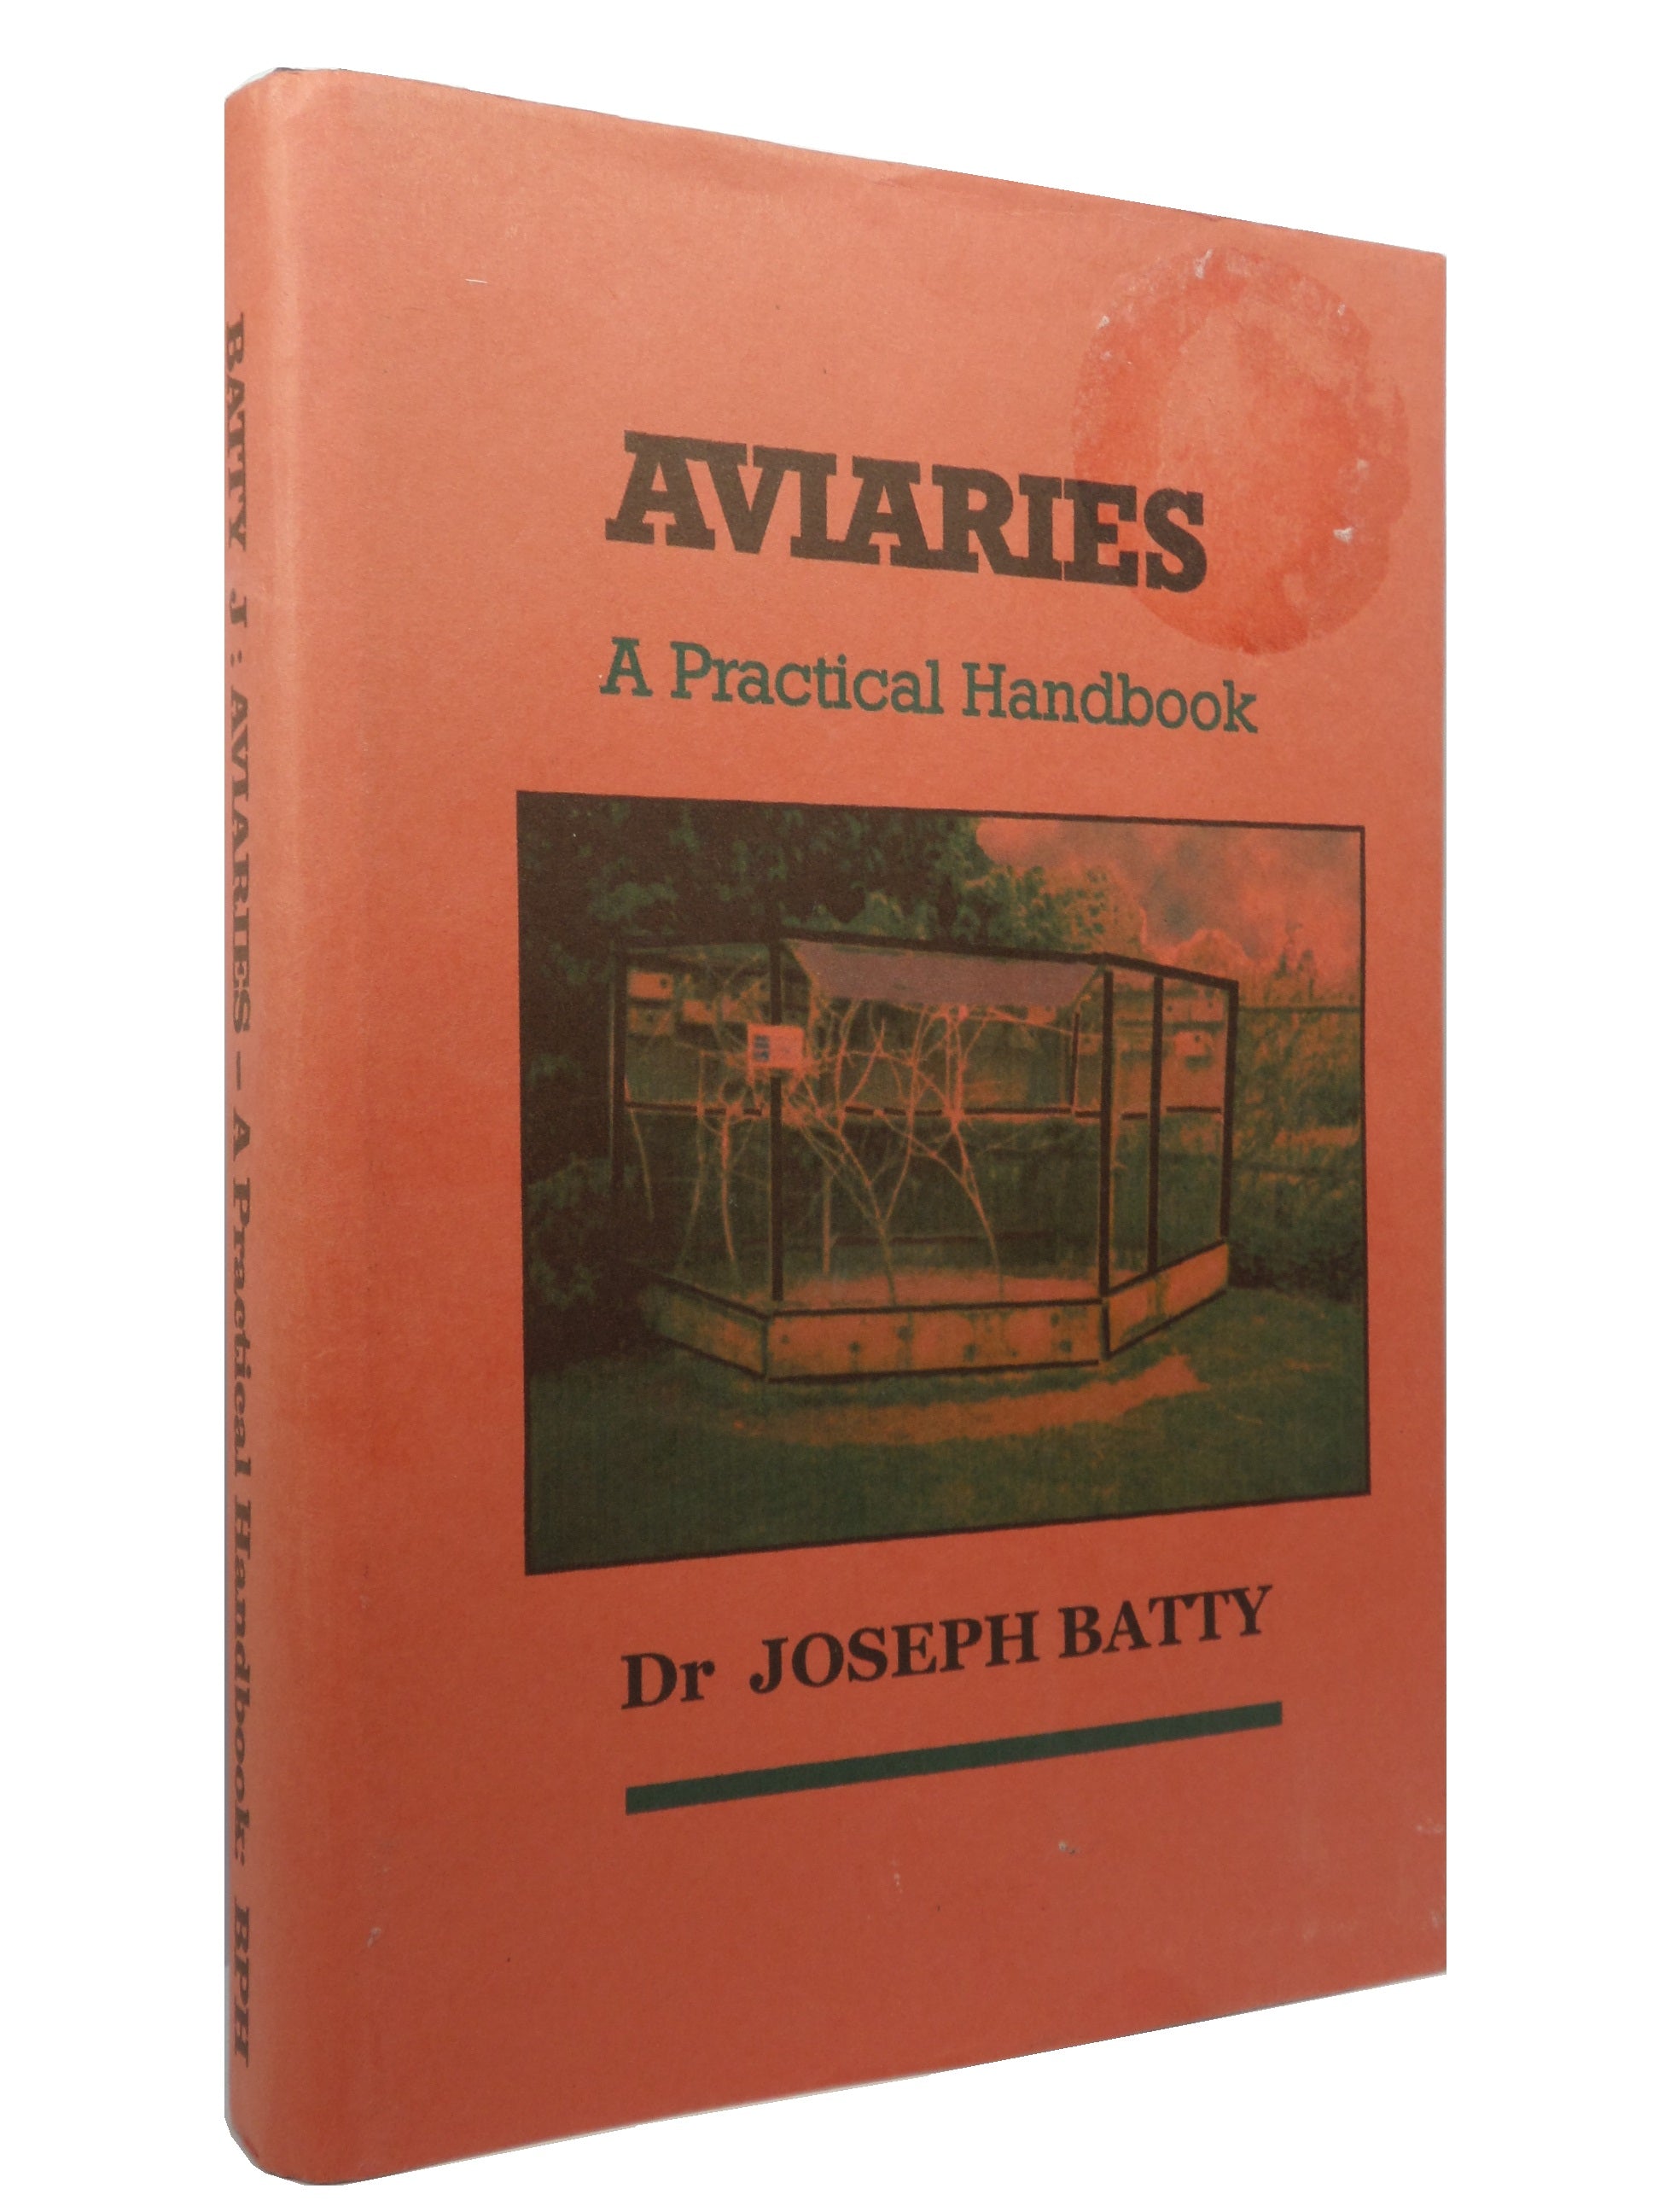 AVIARIES: A PRACTICAL HANDBOOK BY JOSEPH BATTY 2006 FIRST EDITION HARDCOVER